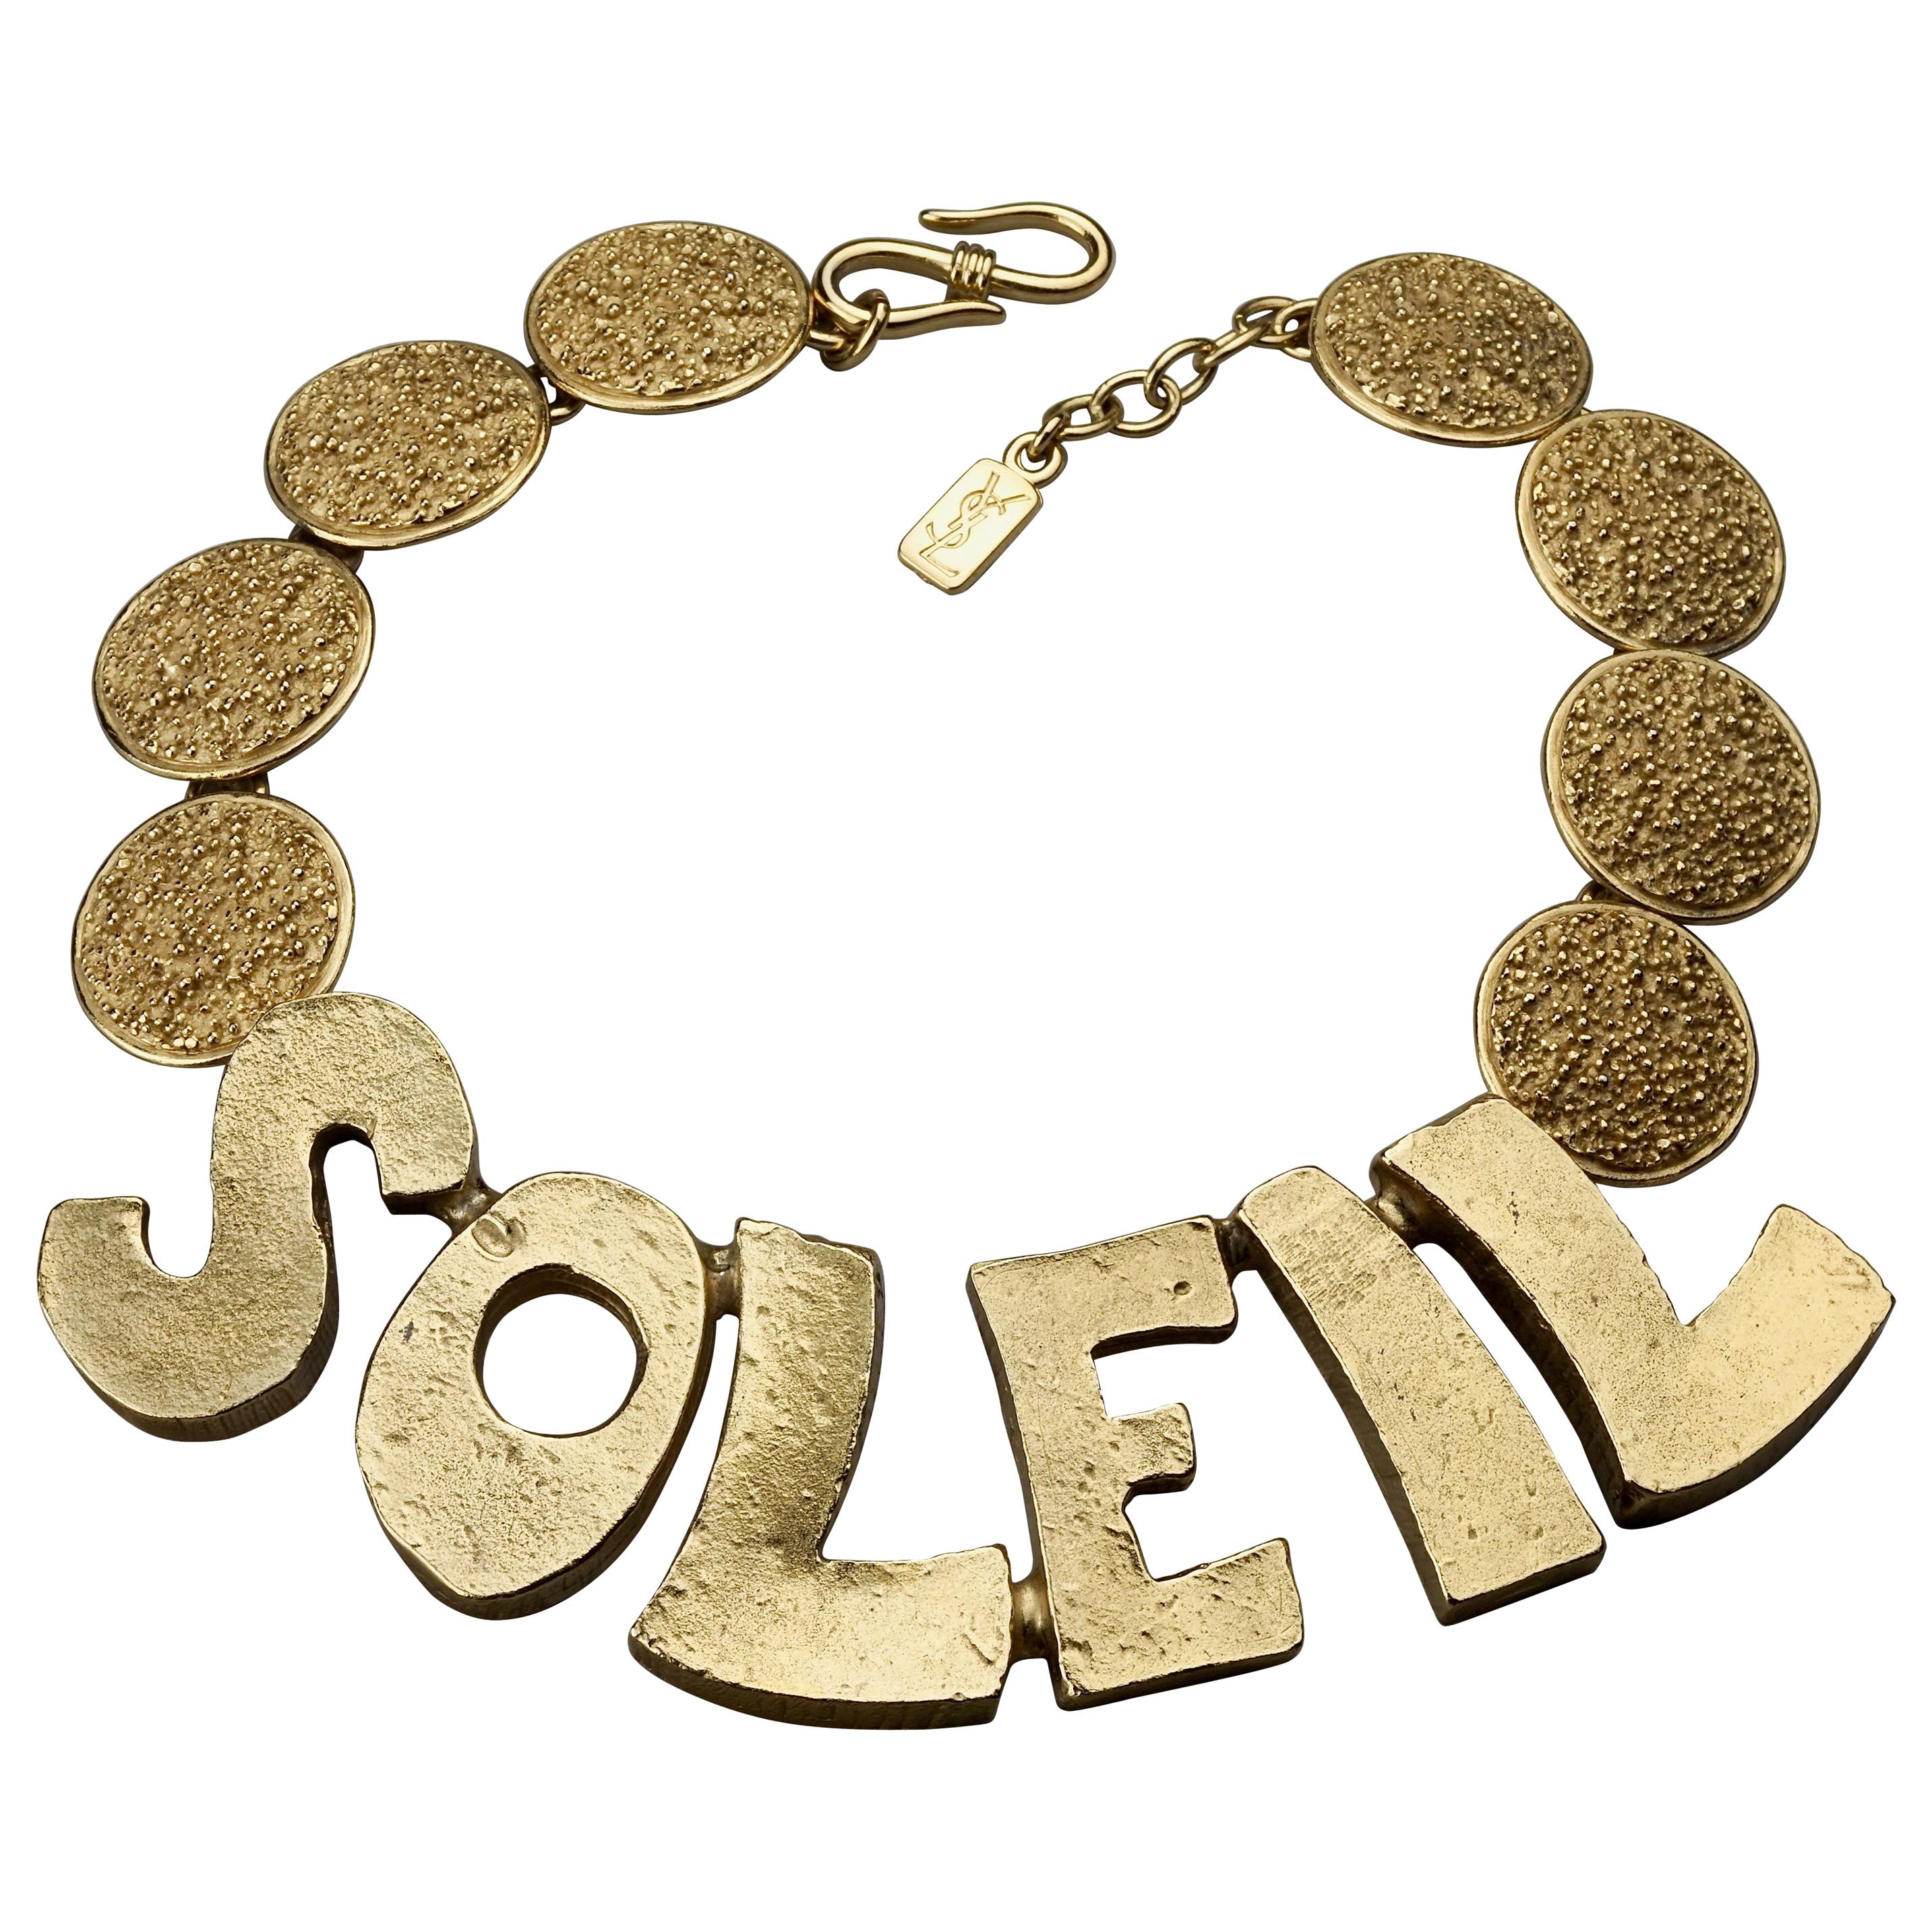 YVES SAINT LAURENT Ysl "Soleil"  Textured Disc Choker Necklace by Robert Goossen